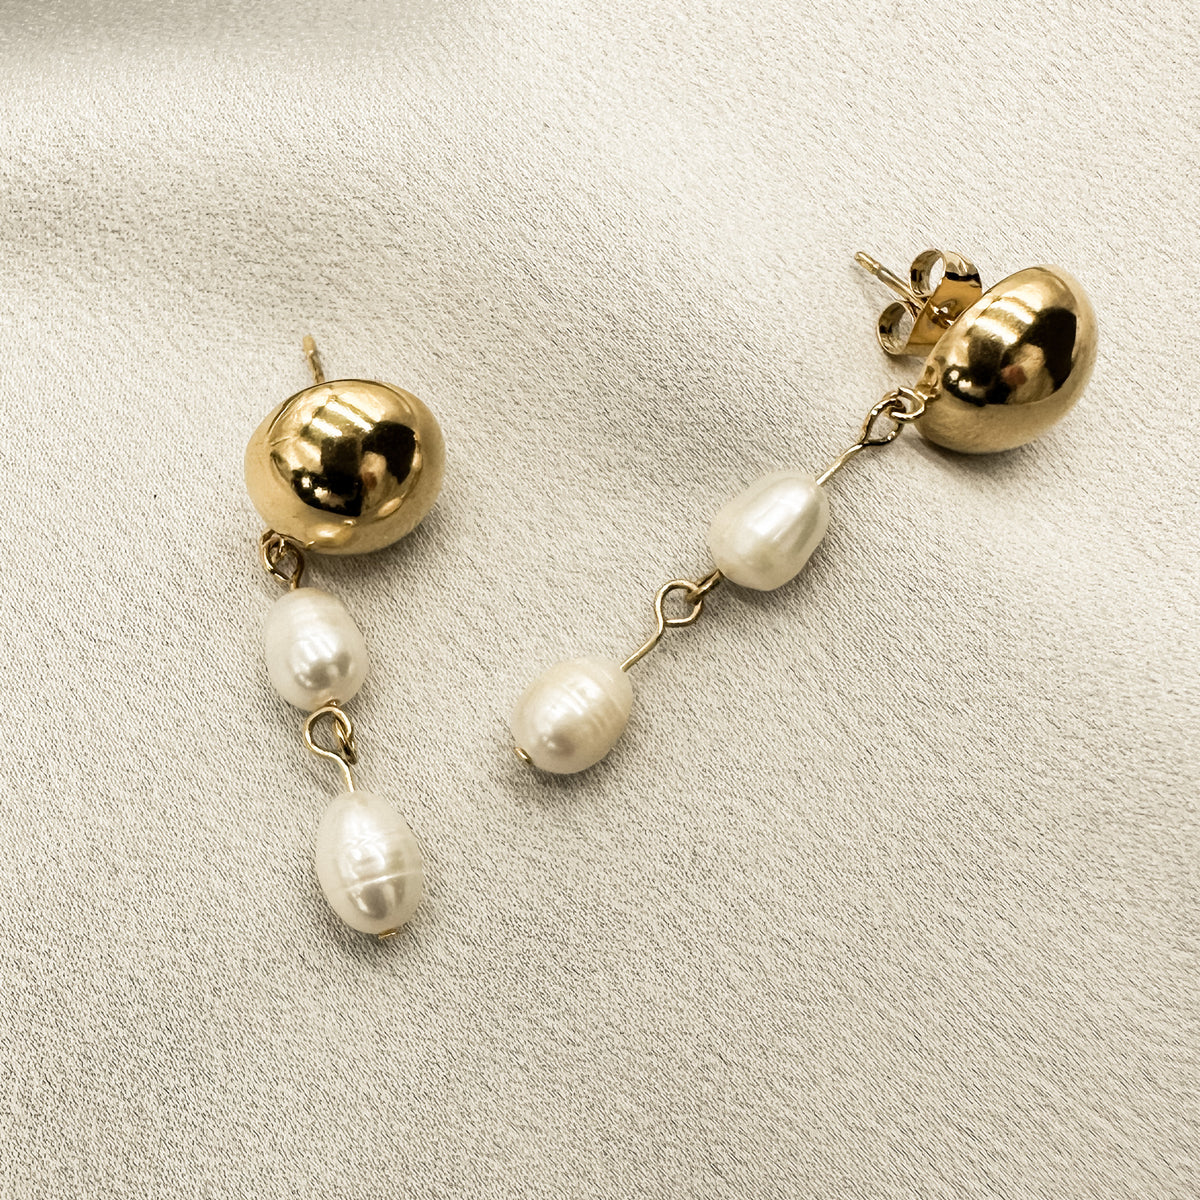 Bridal earrings. pearl earrings that dangle